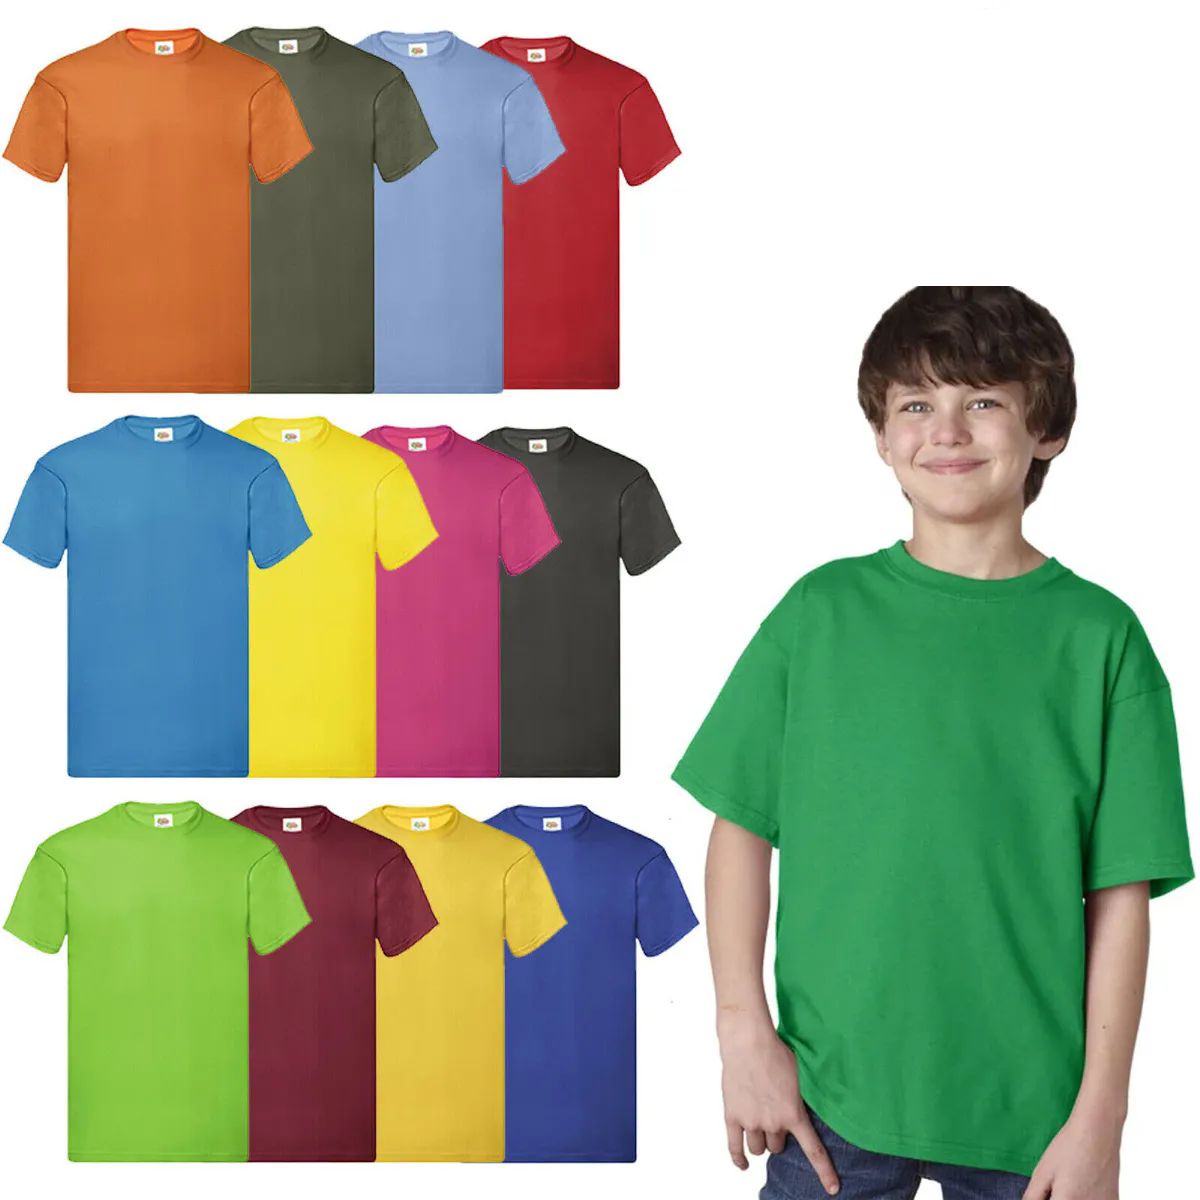 72 Bulk Billion Hats Kids Youth Cotton Assorted Colors T Shirts Size S